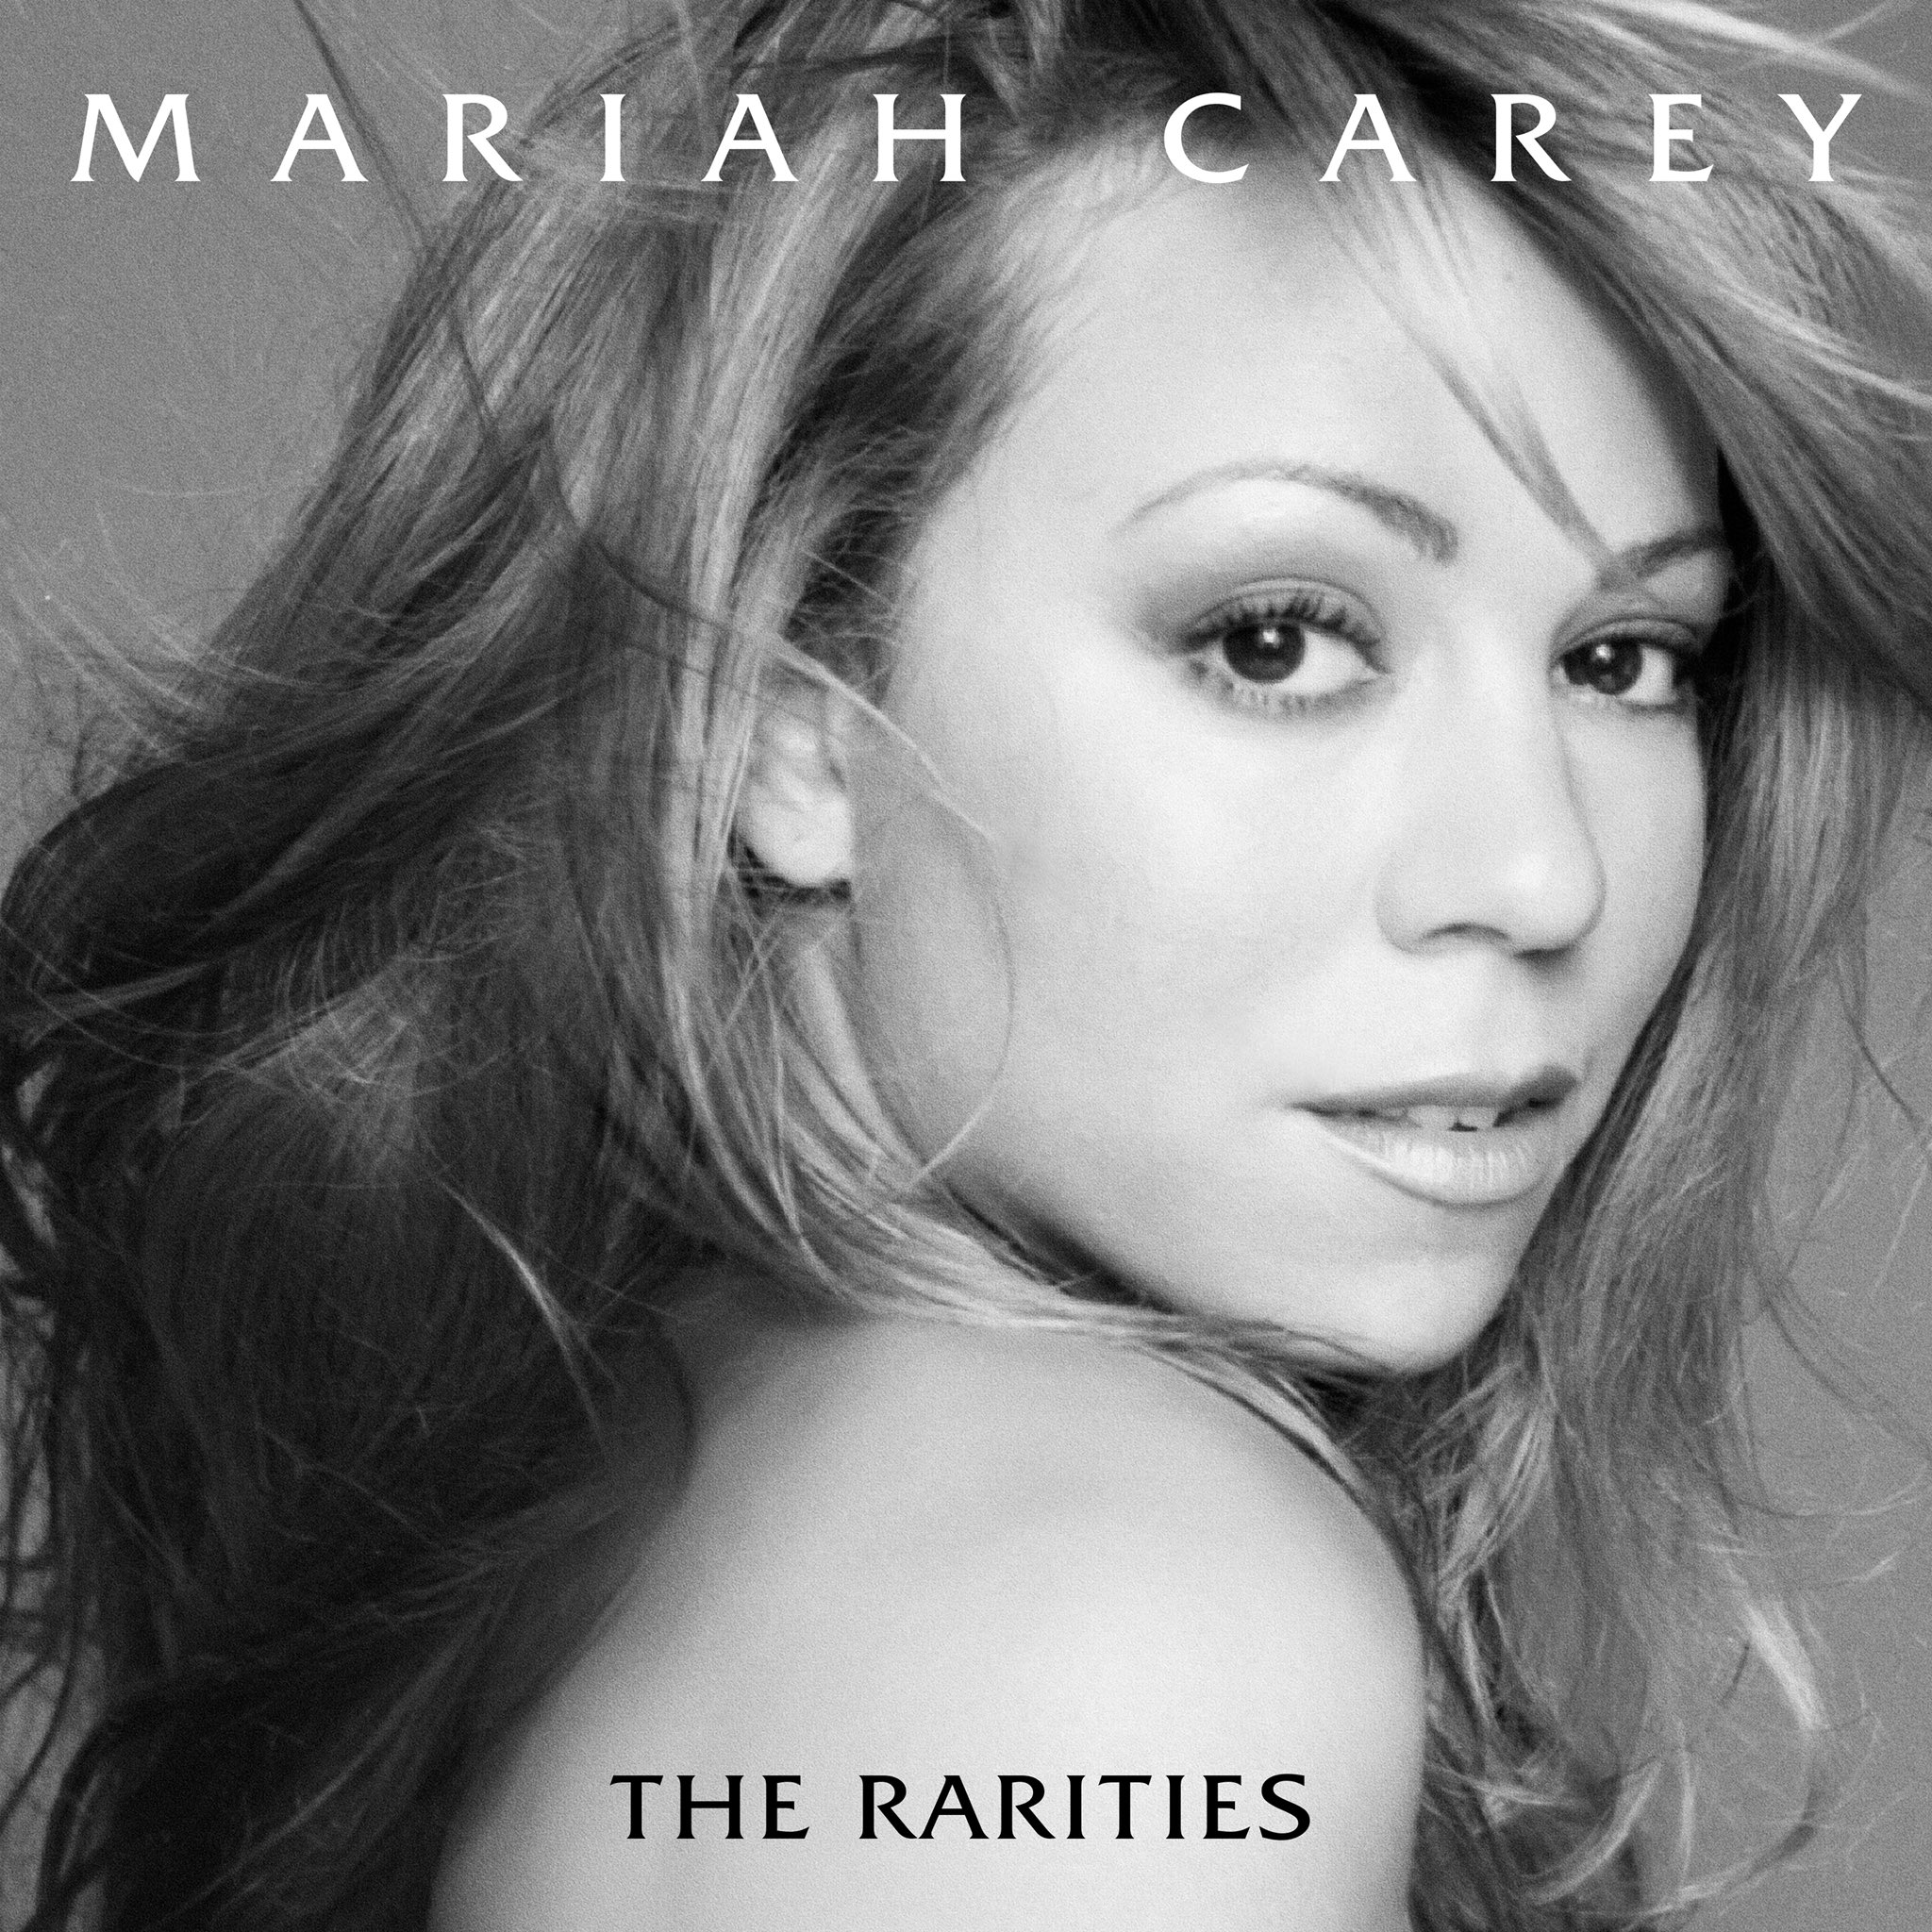 Mariah Carey Announces Release Of Her New Album The Rarities